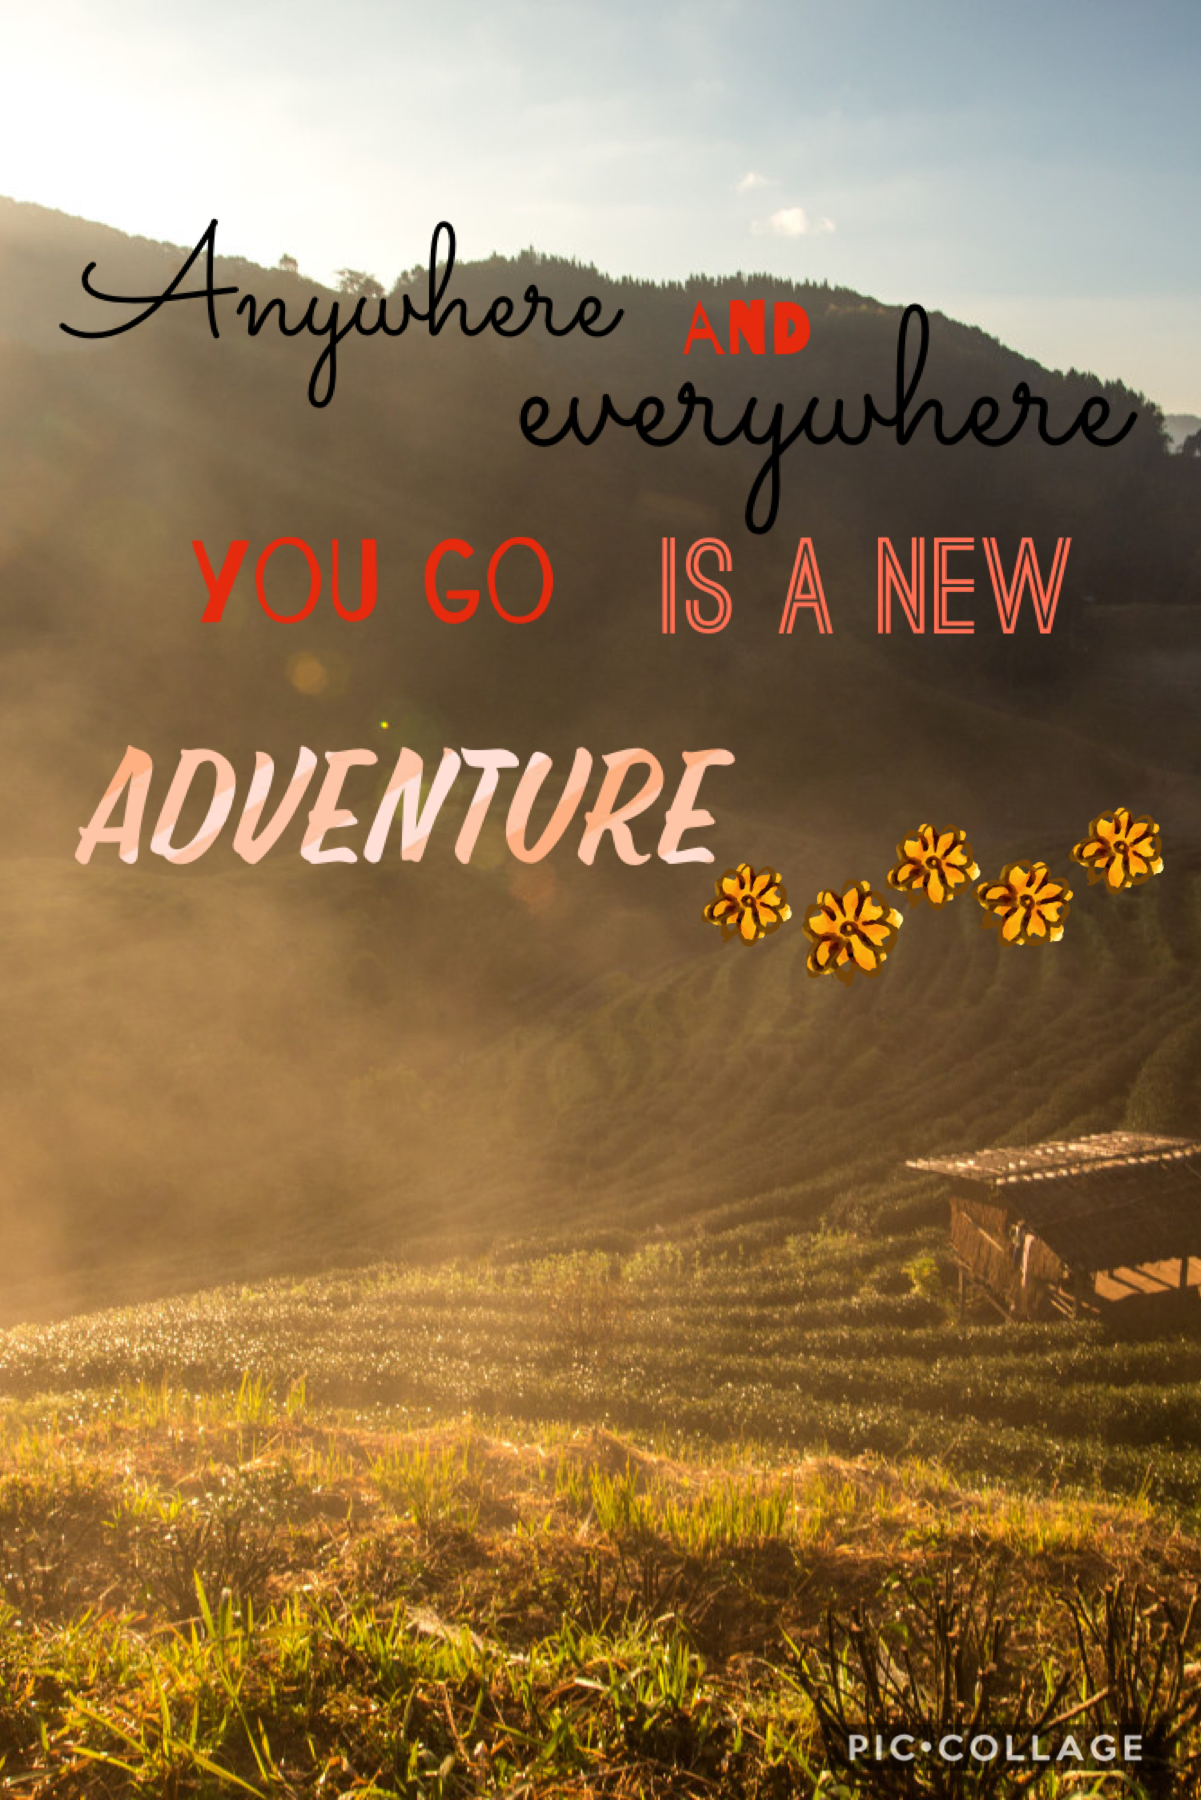 Keep adventuring everybody!